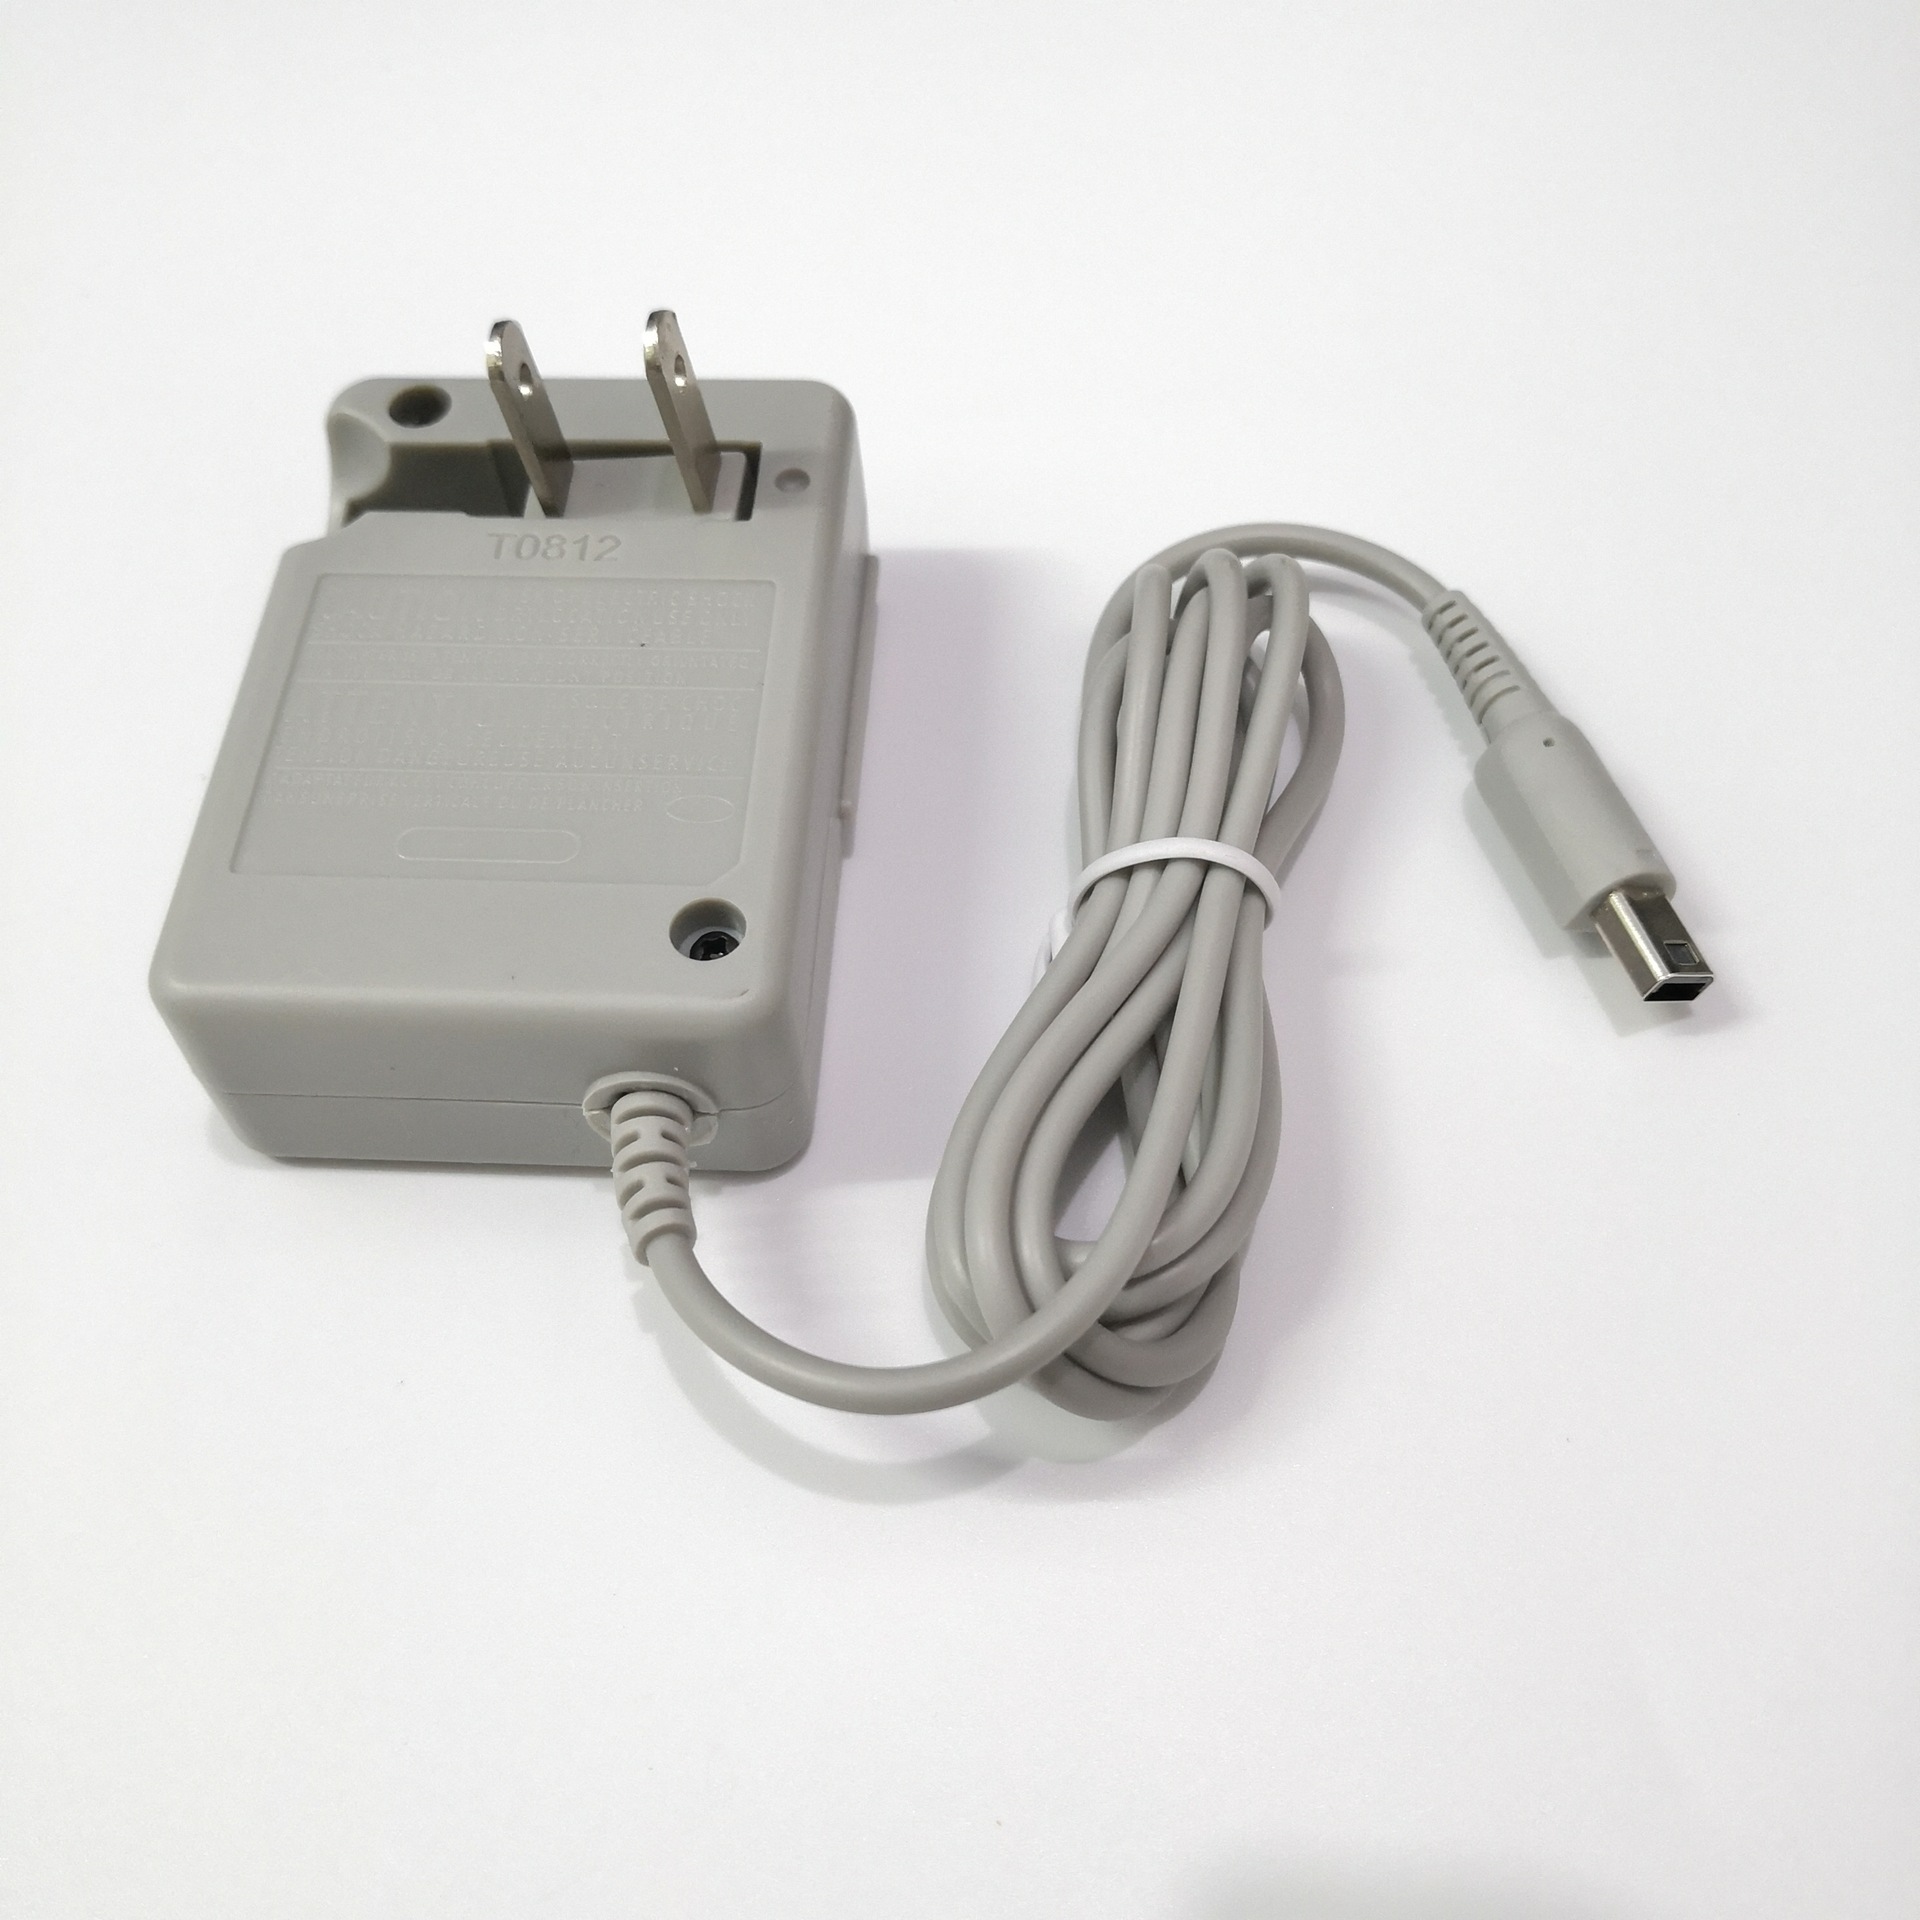 AC Power Charger Adapter Home Wall Travel Batterij Lader Lader Levering Kabel Cord EU US Plug voor Nintendo NDSI 3DS 3DSXL LL DSI